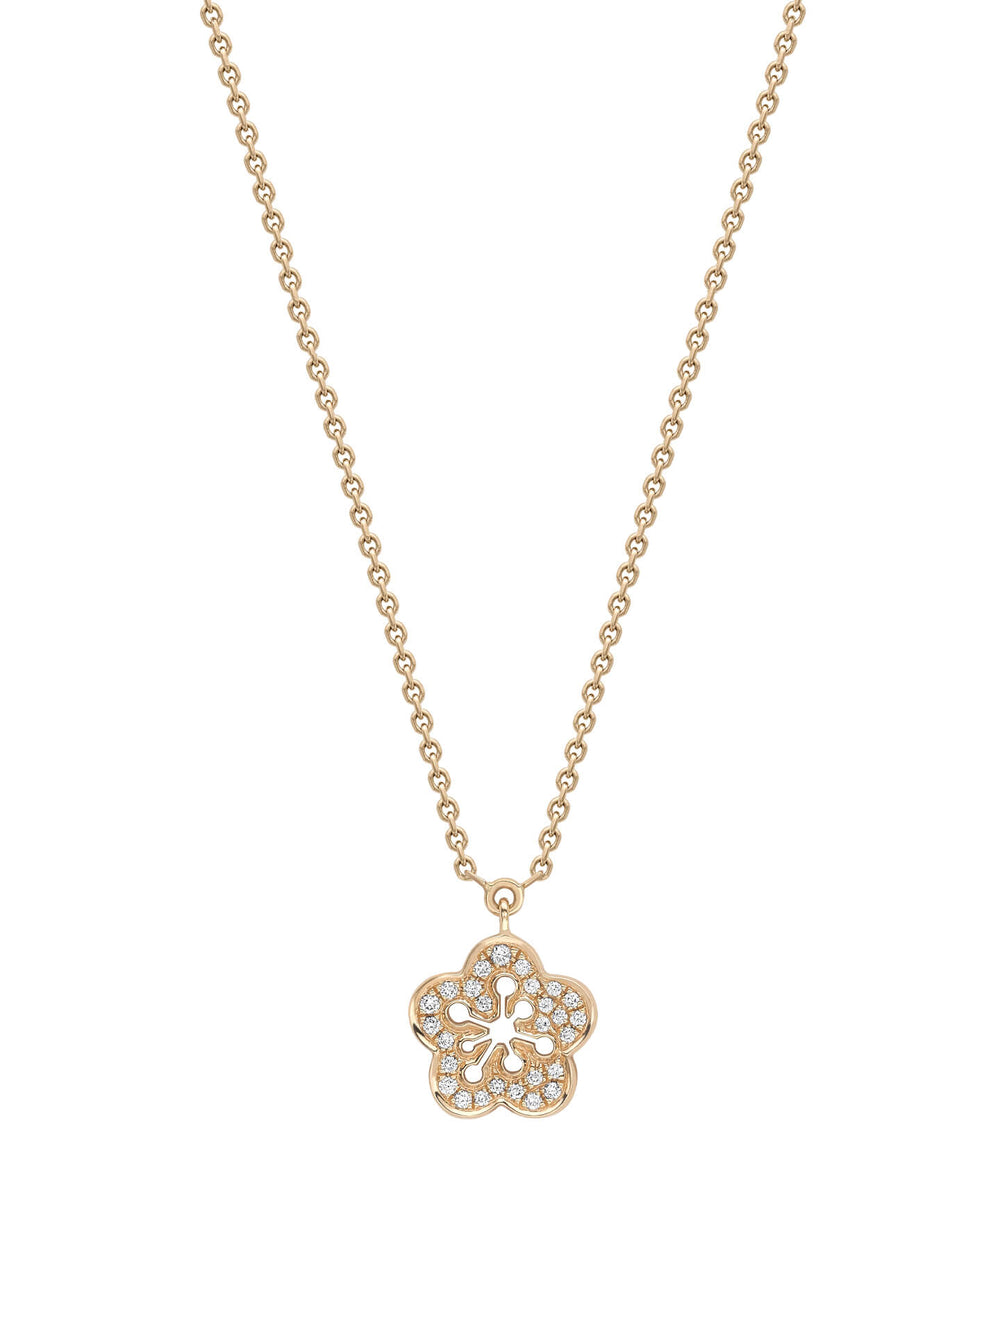 A beautiful mini rose gold diamond necklace